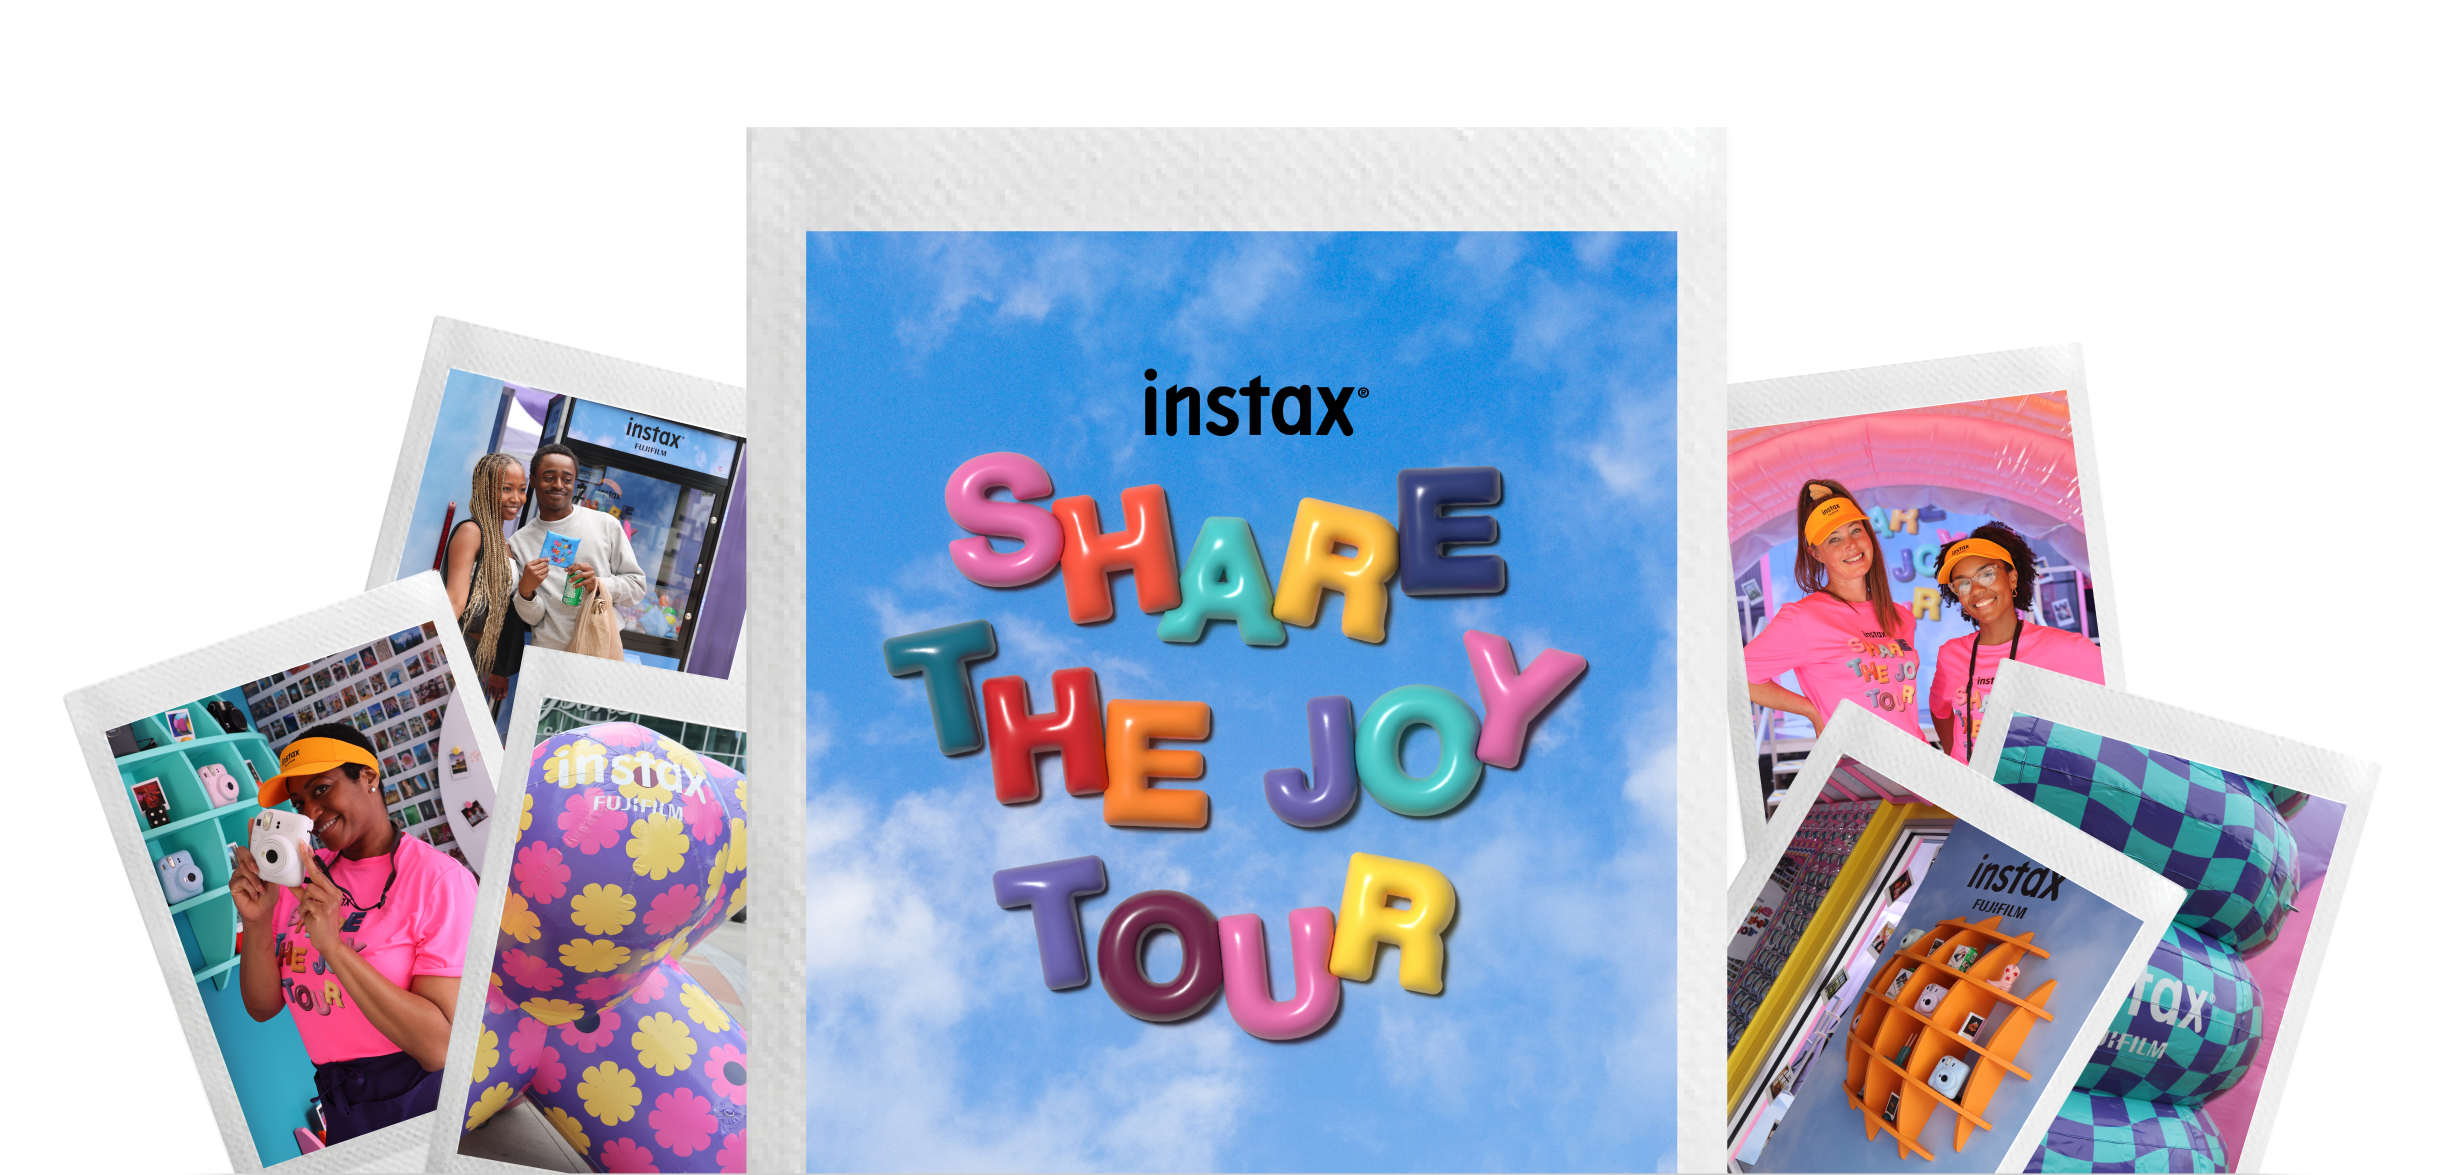 share the joy tour